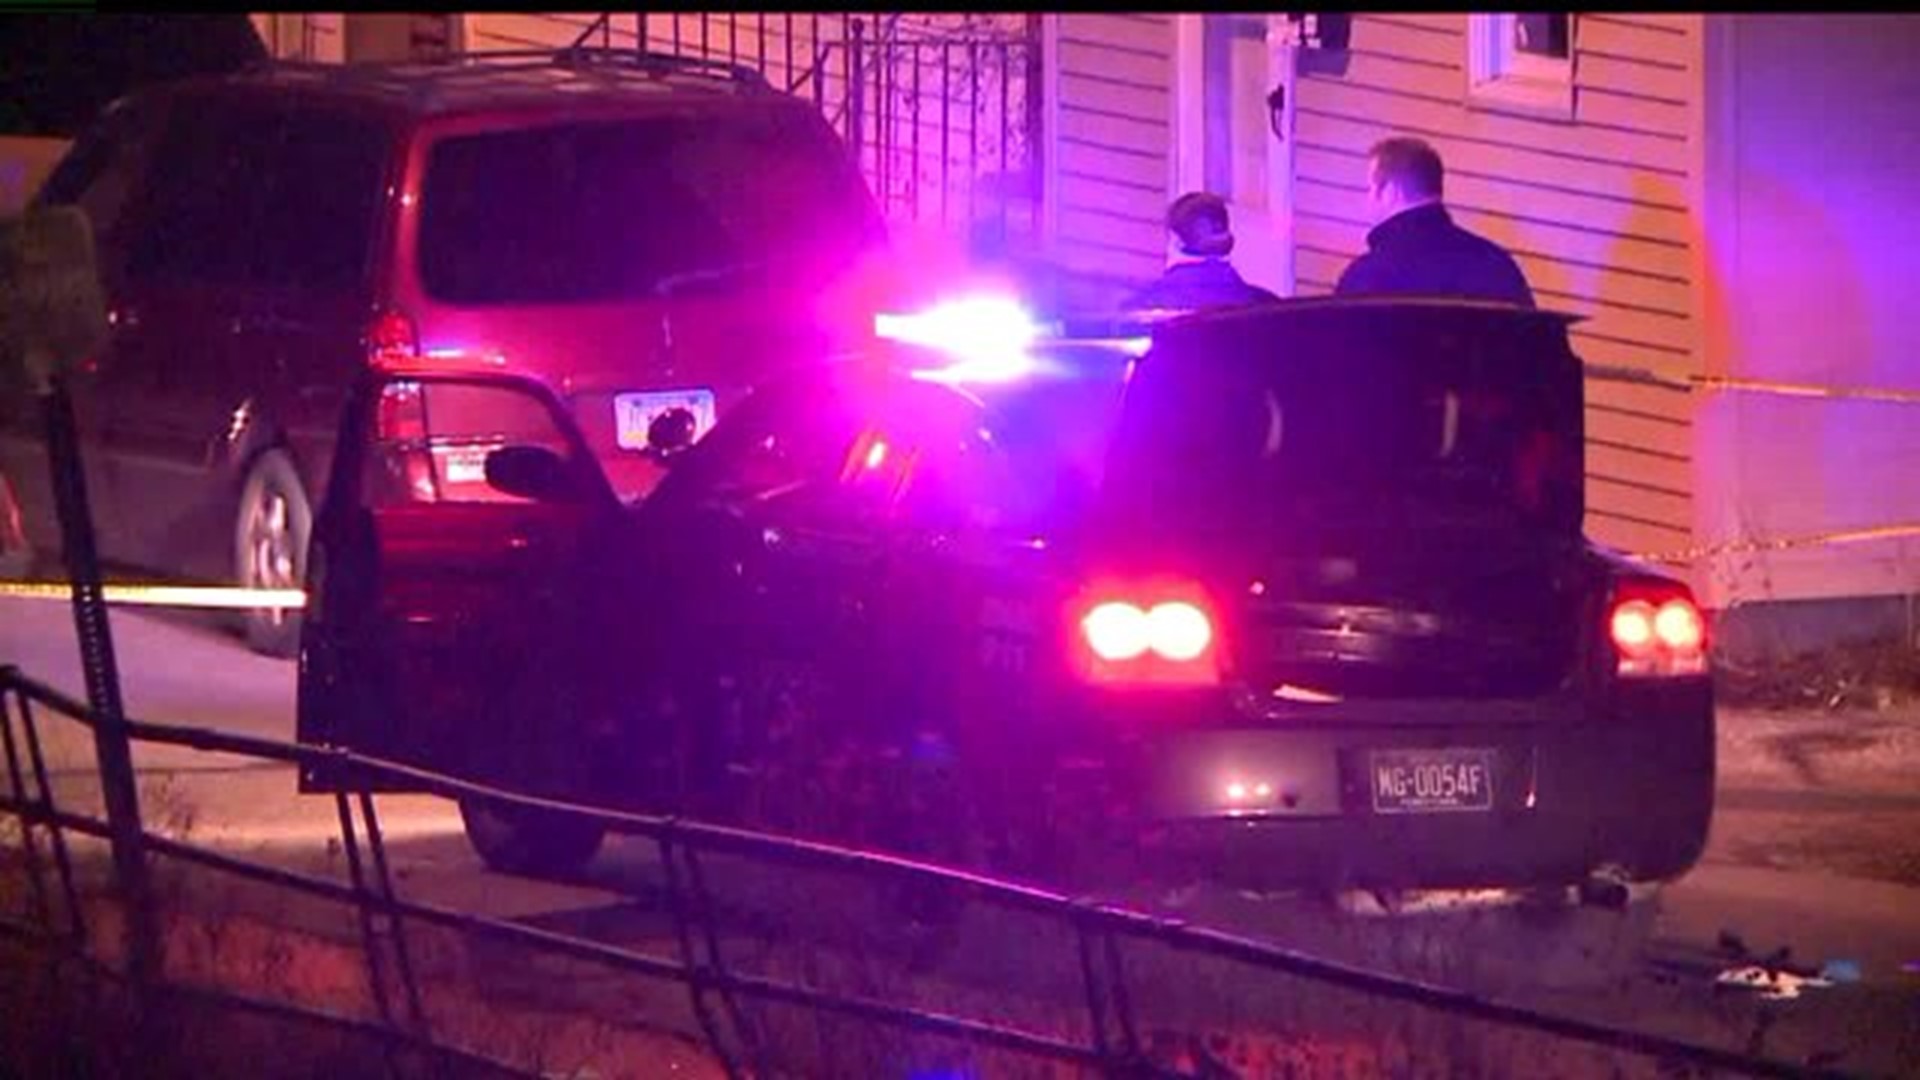 Officer involved shooting in York City